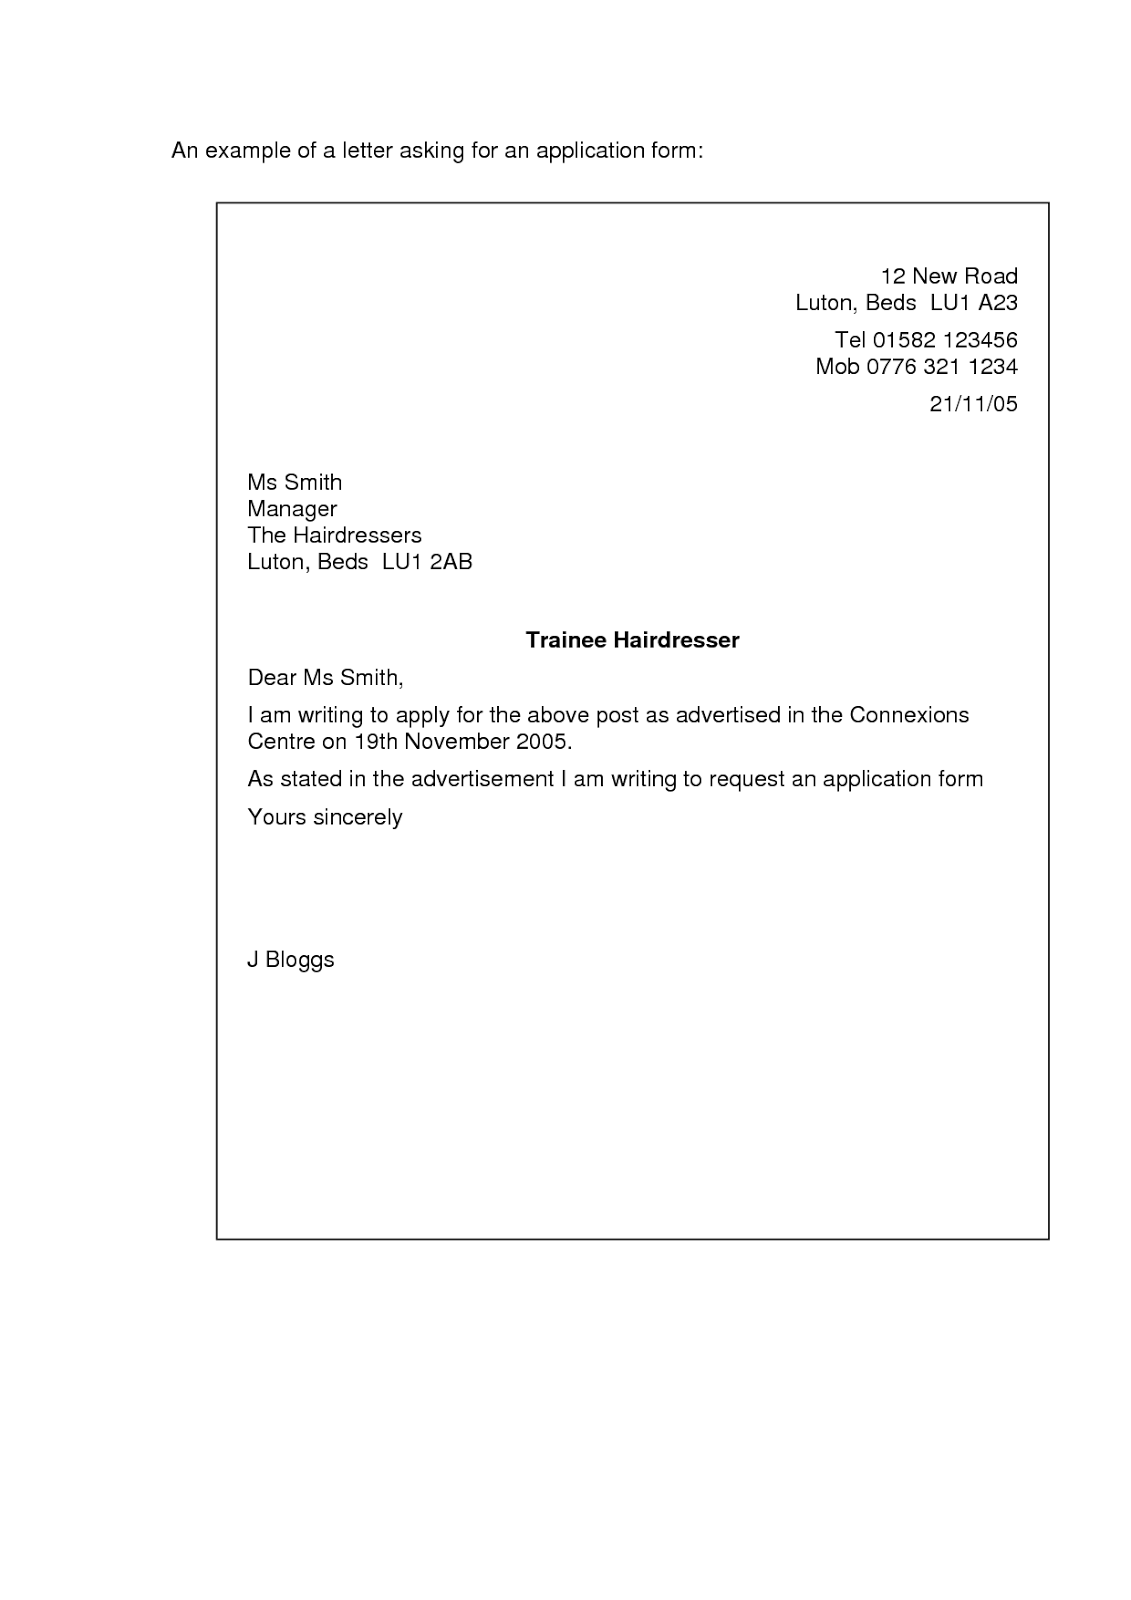 General interest job cover letter